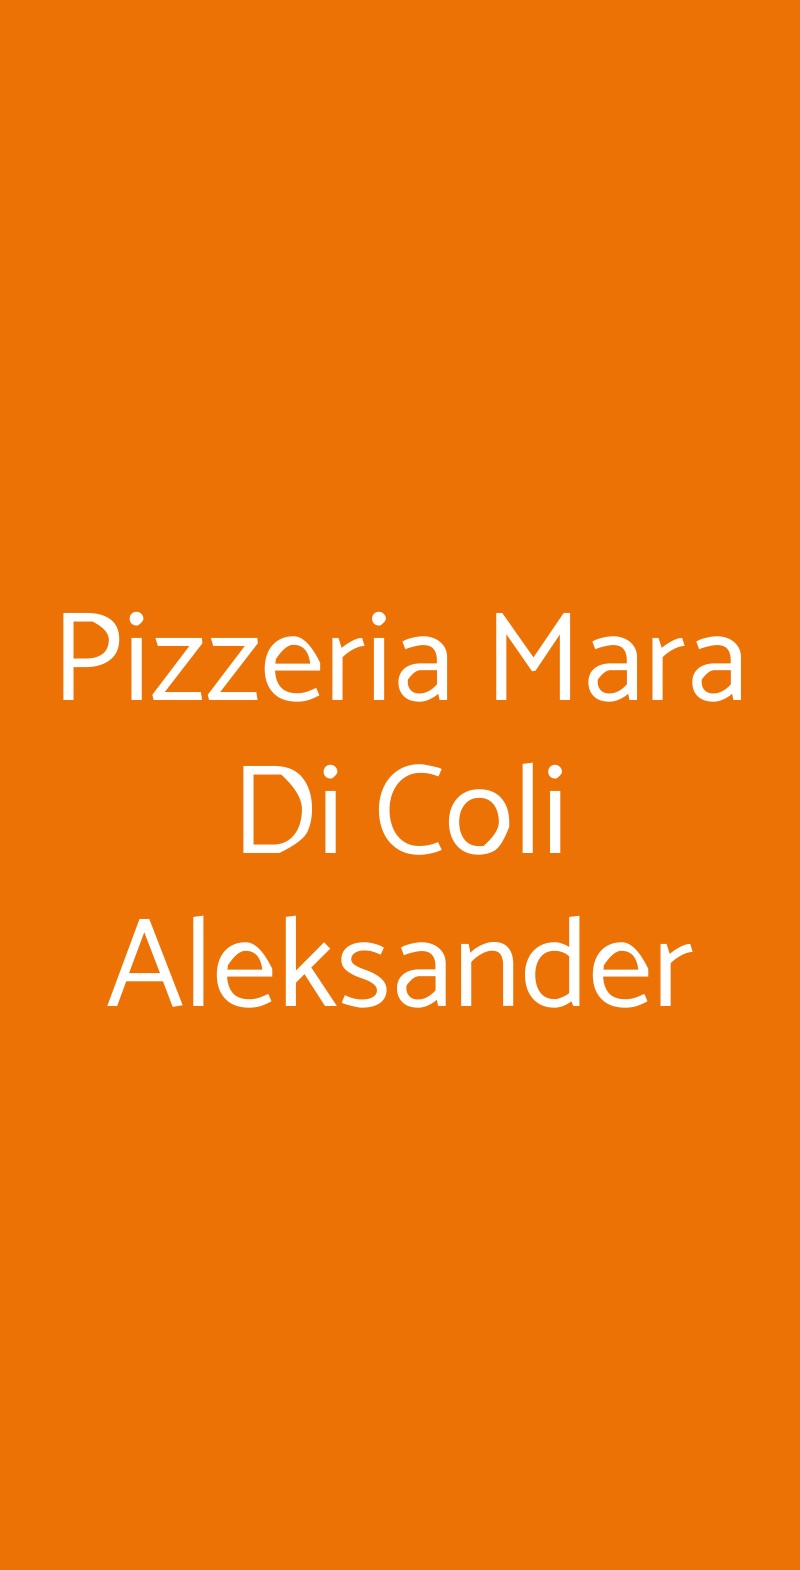 Pizzeria Mara Di Coli Aleksander Gallarate menù 1 pagina